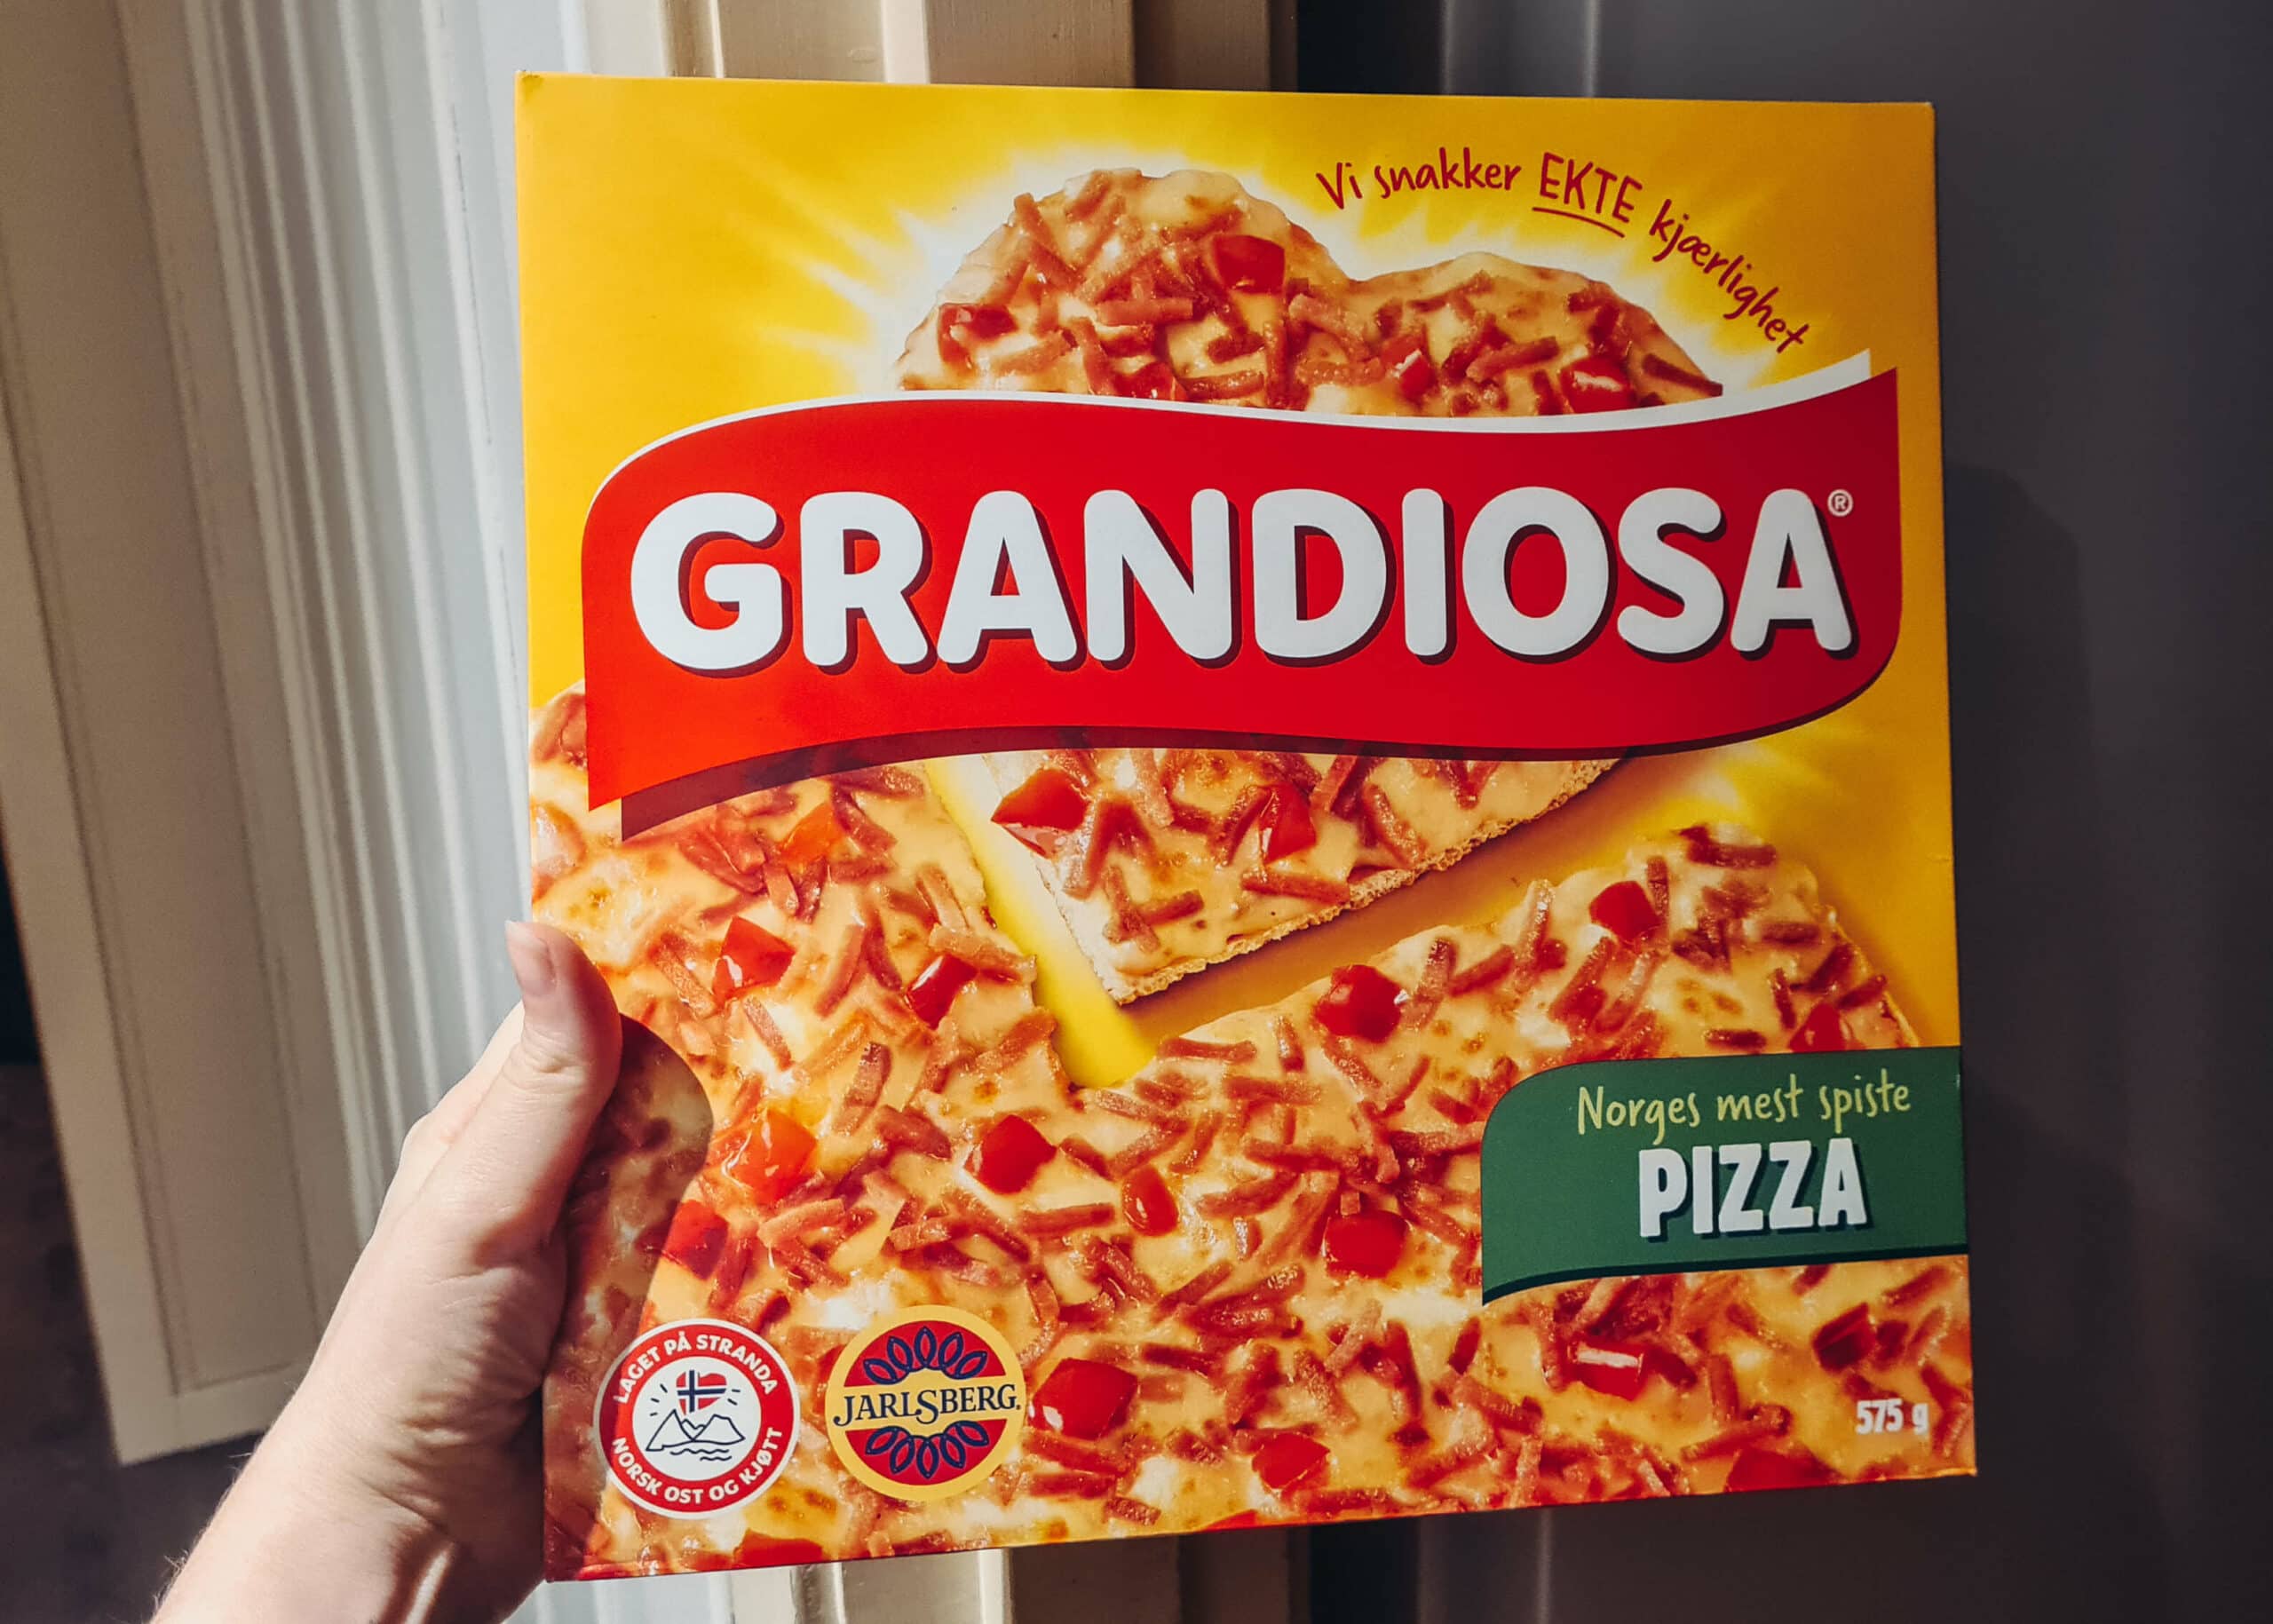 Fun fact, Norwegians love Grandiosa from this orange Grandiosa frozen pizza carton.